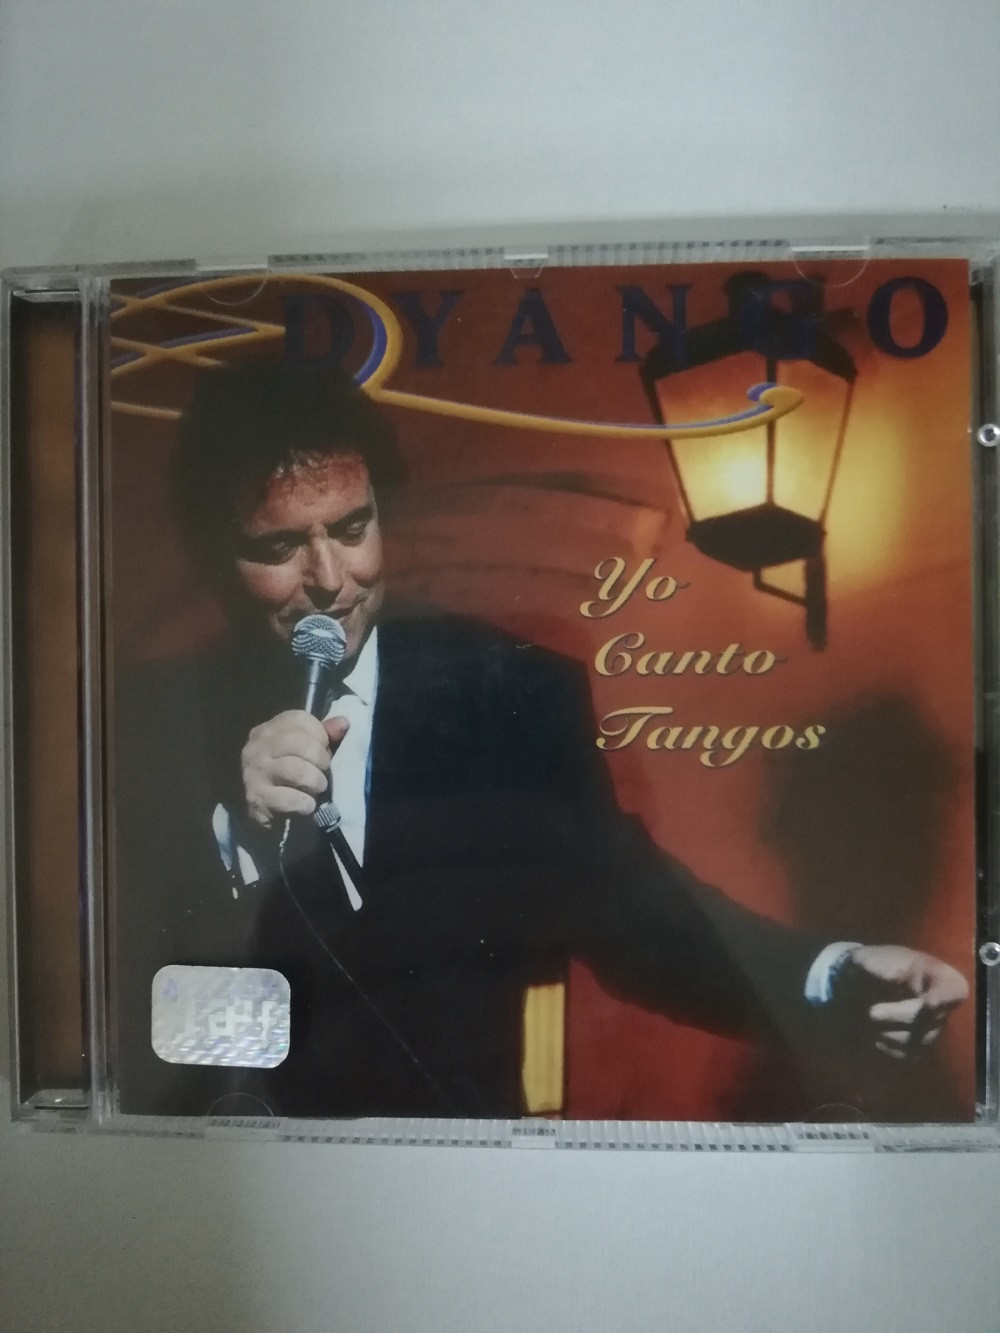 Imagen CD DYANGO - YO CANTO TANGOS